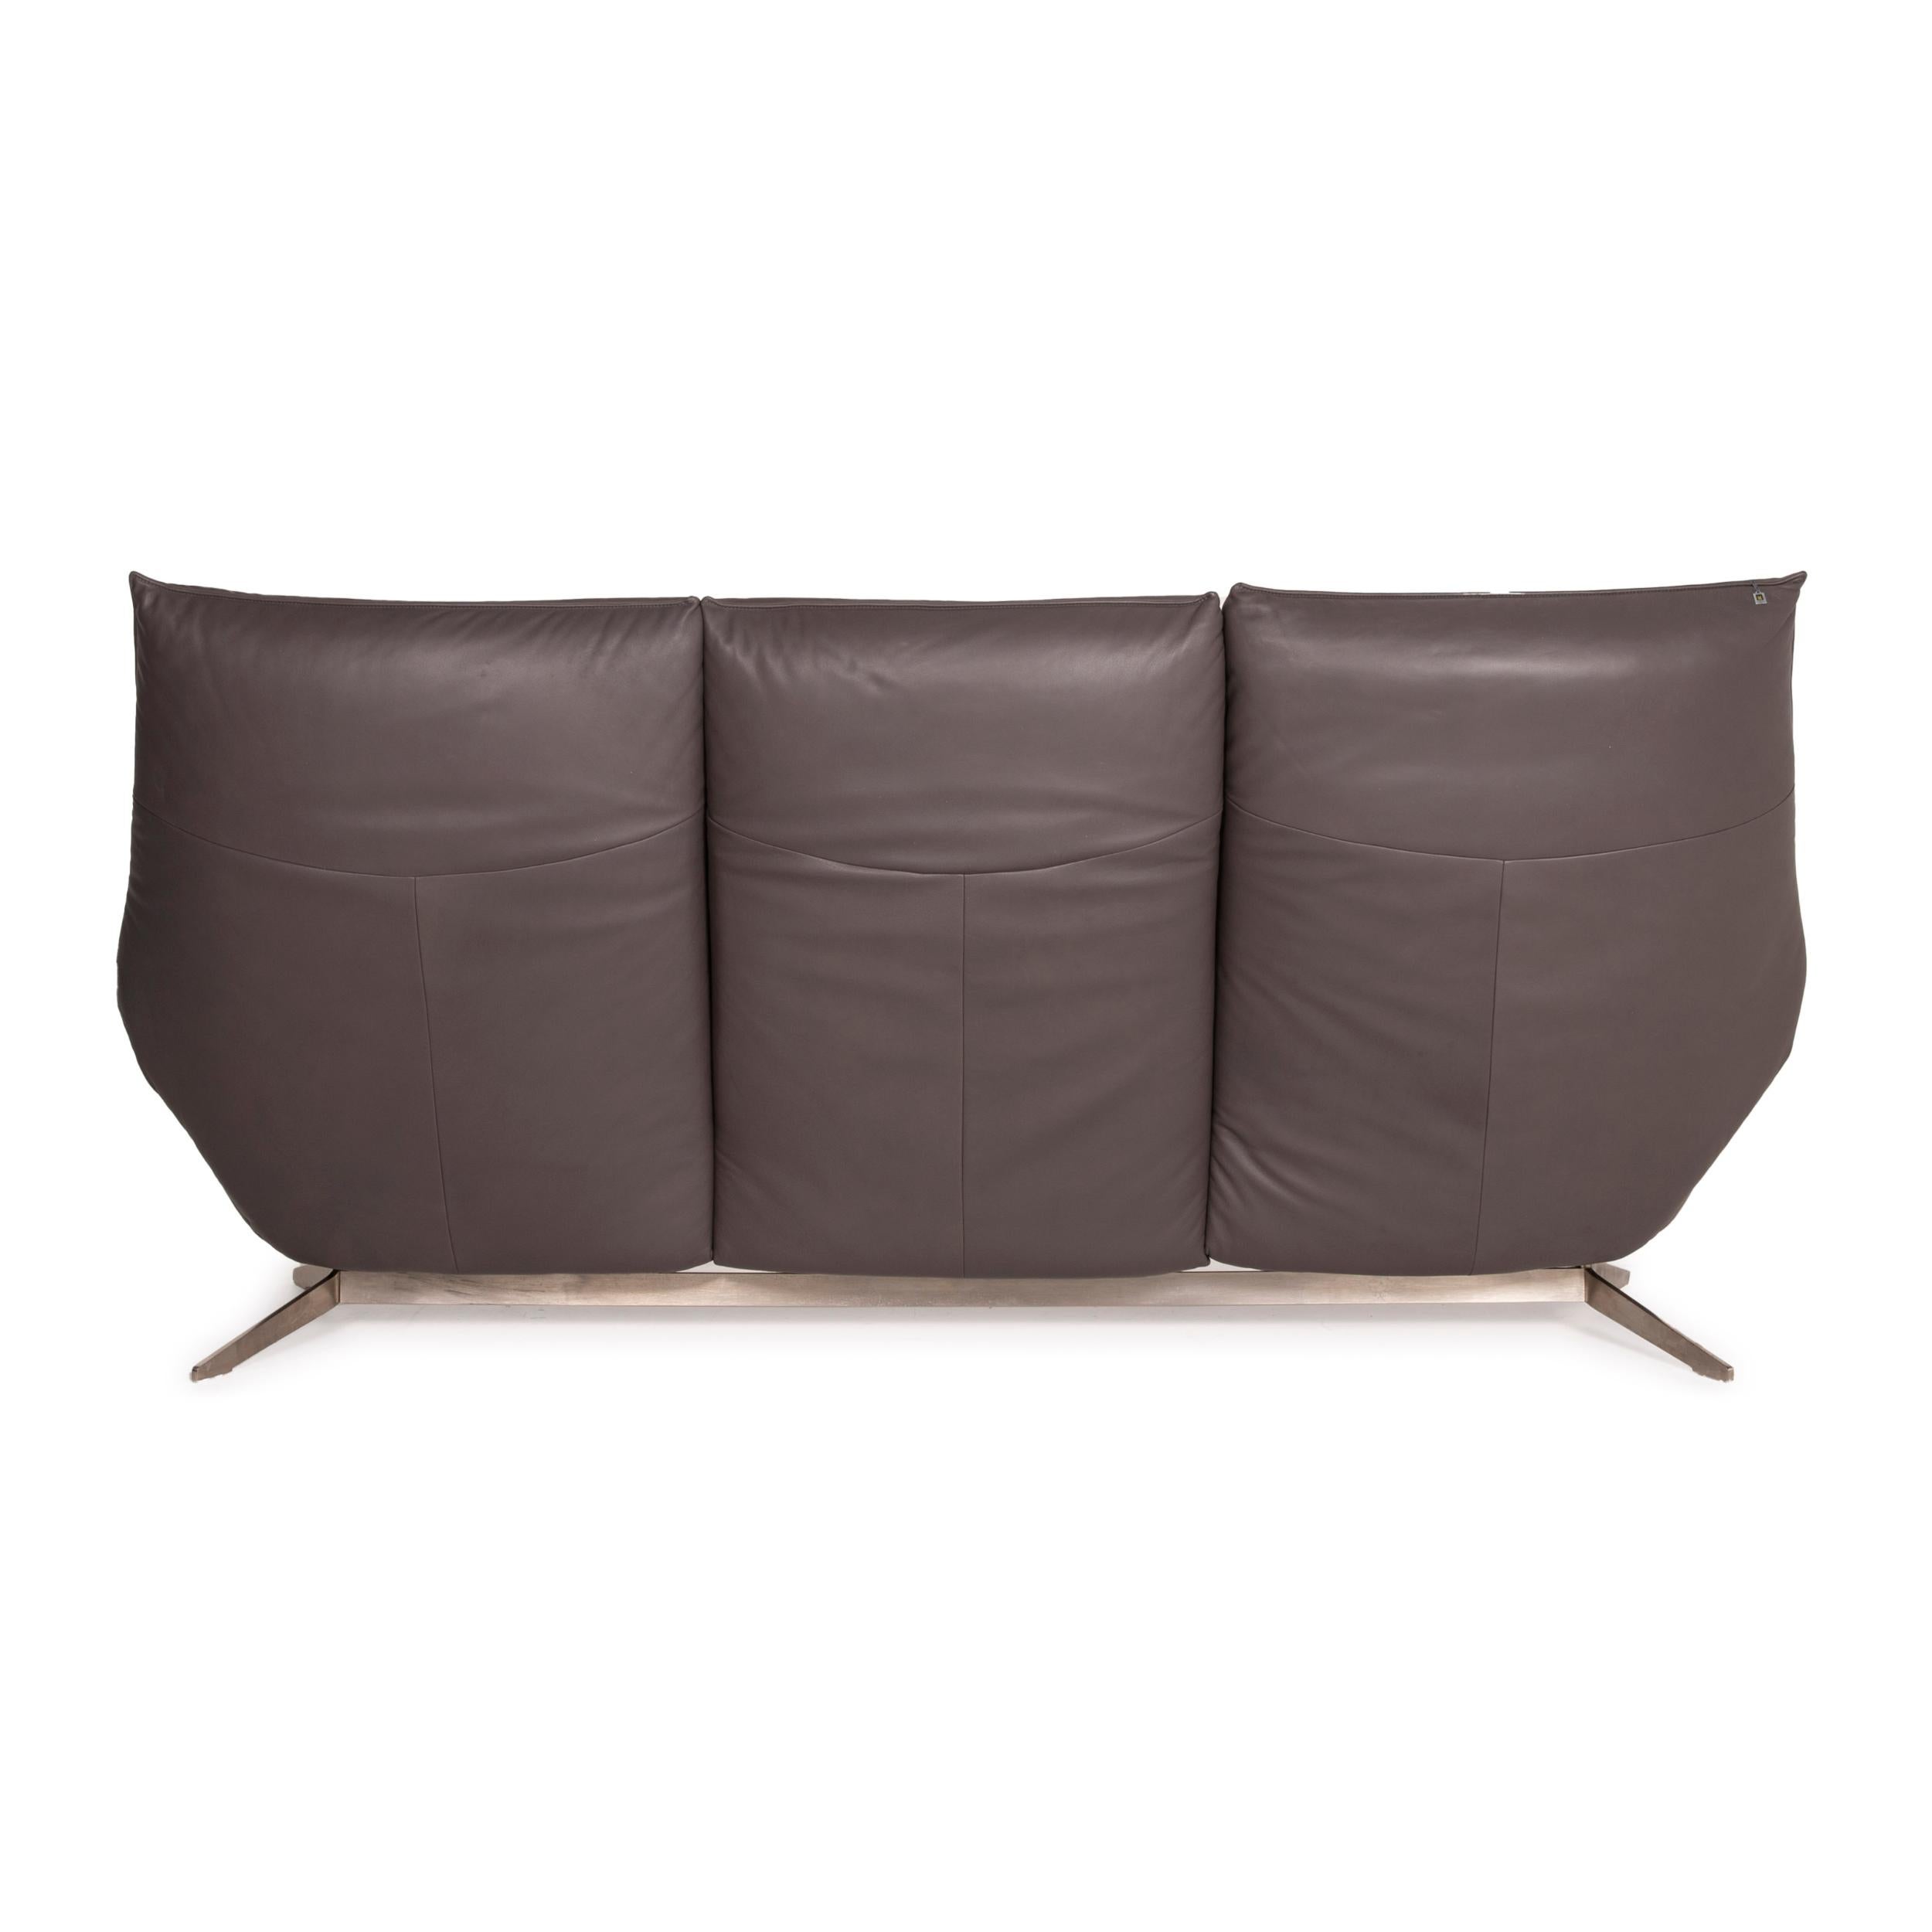 Koinor Evita Leather Sofa Set Gray Brown 1x Three-Seater 1x Stool For Sale 11